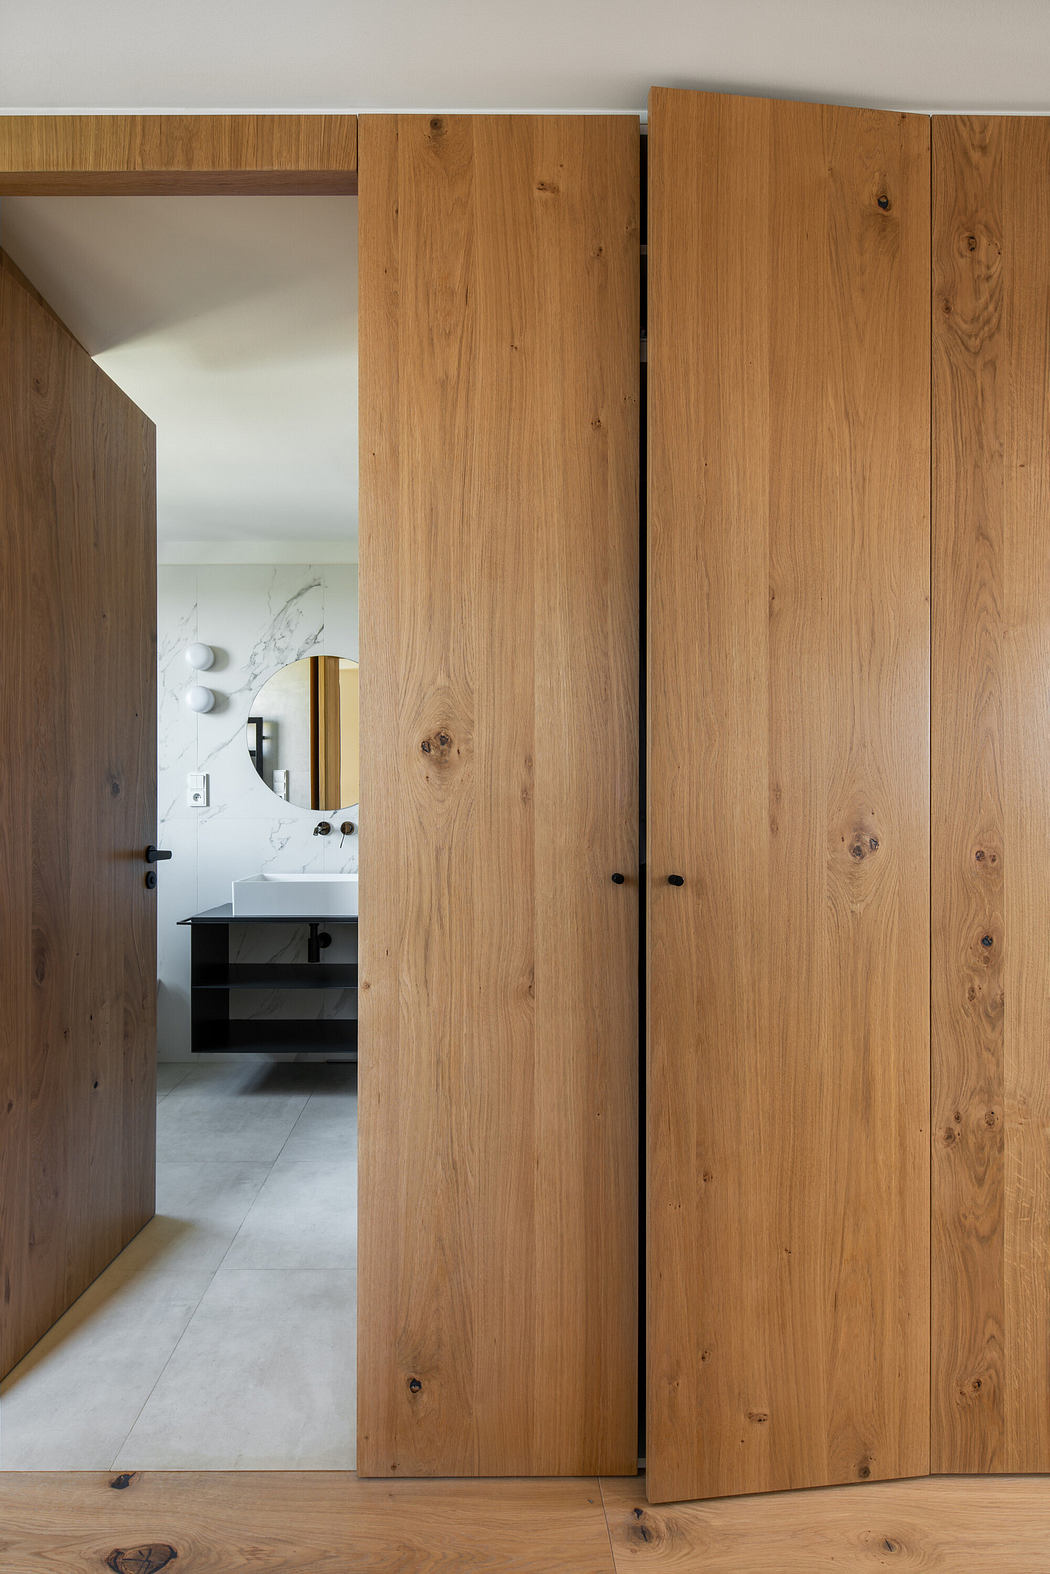 Wooden doors partially open leading to a modern bathroom interior.